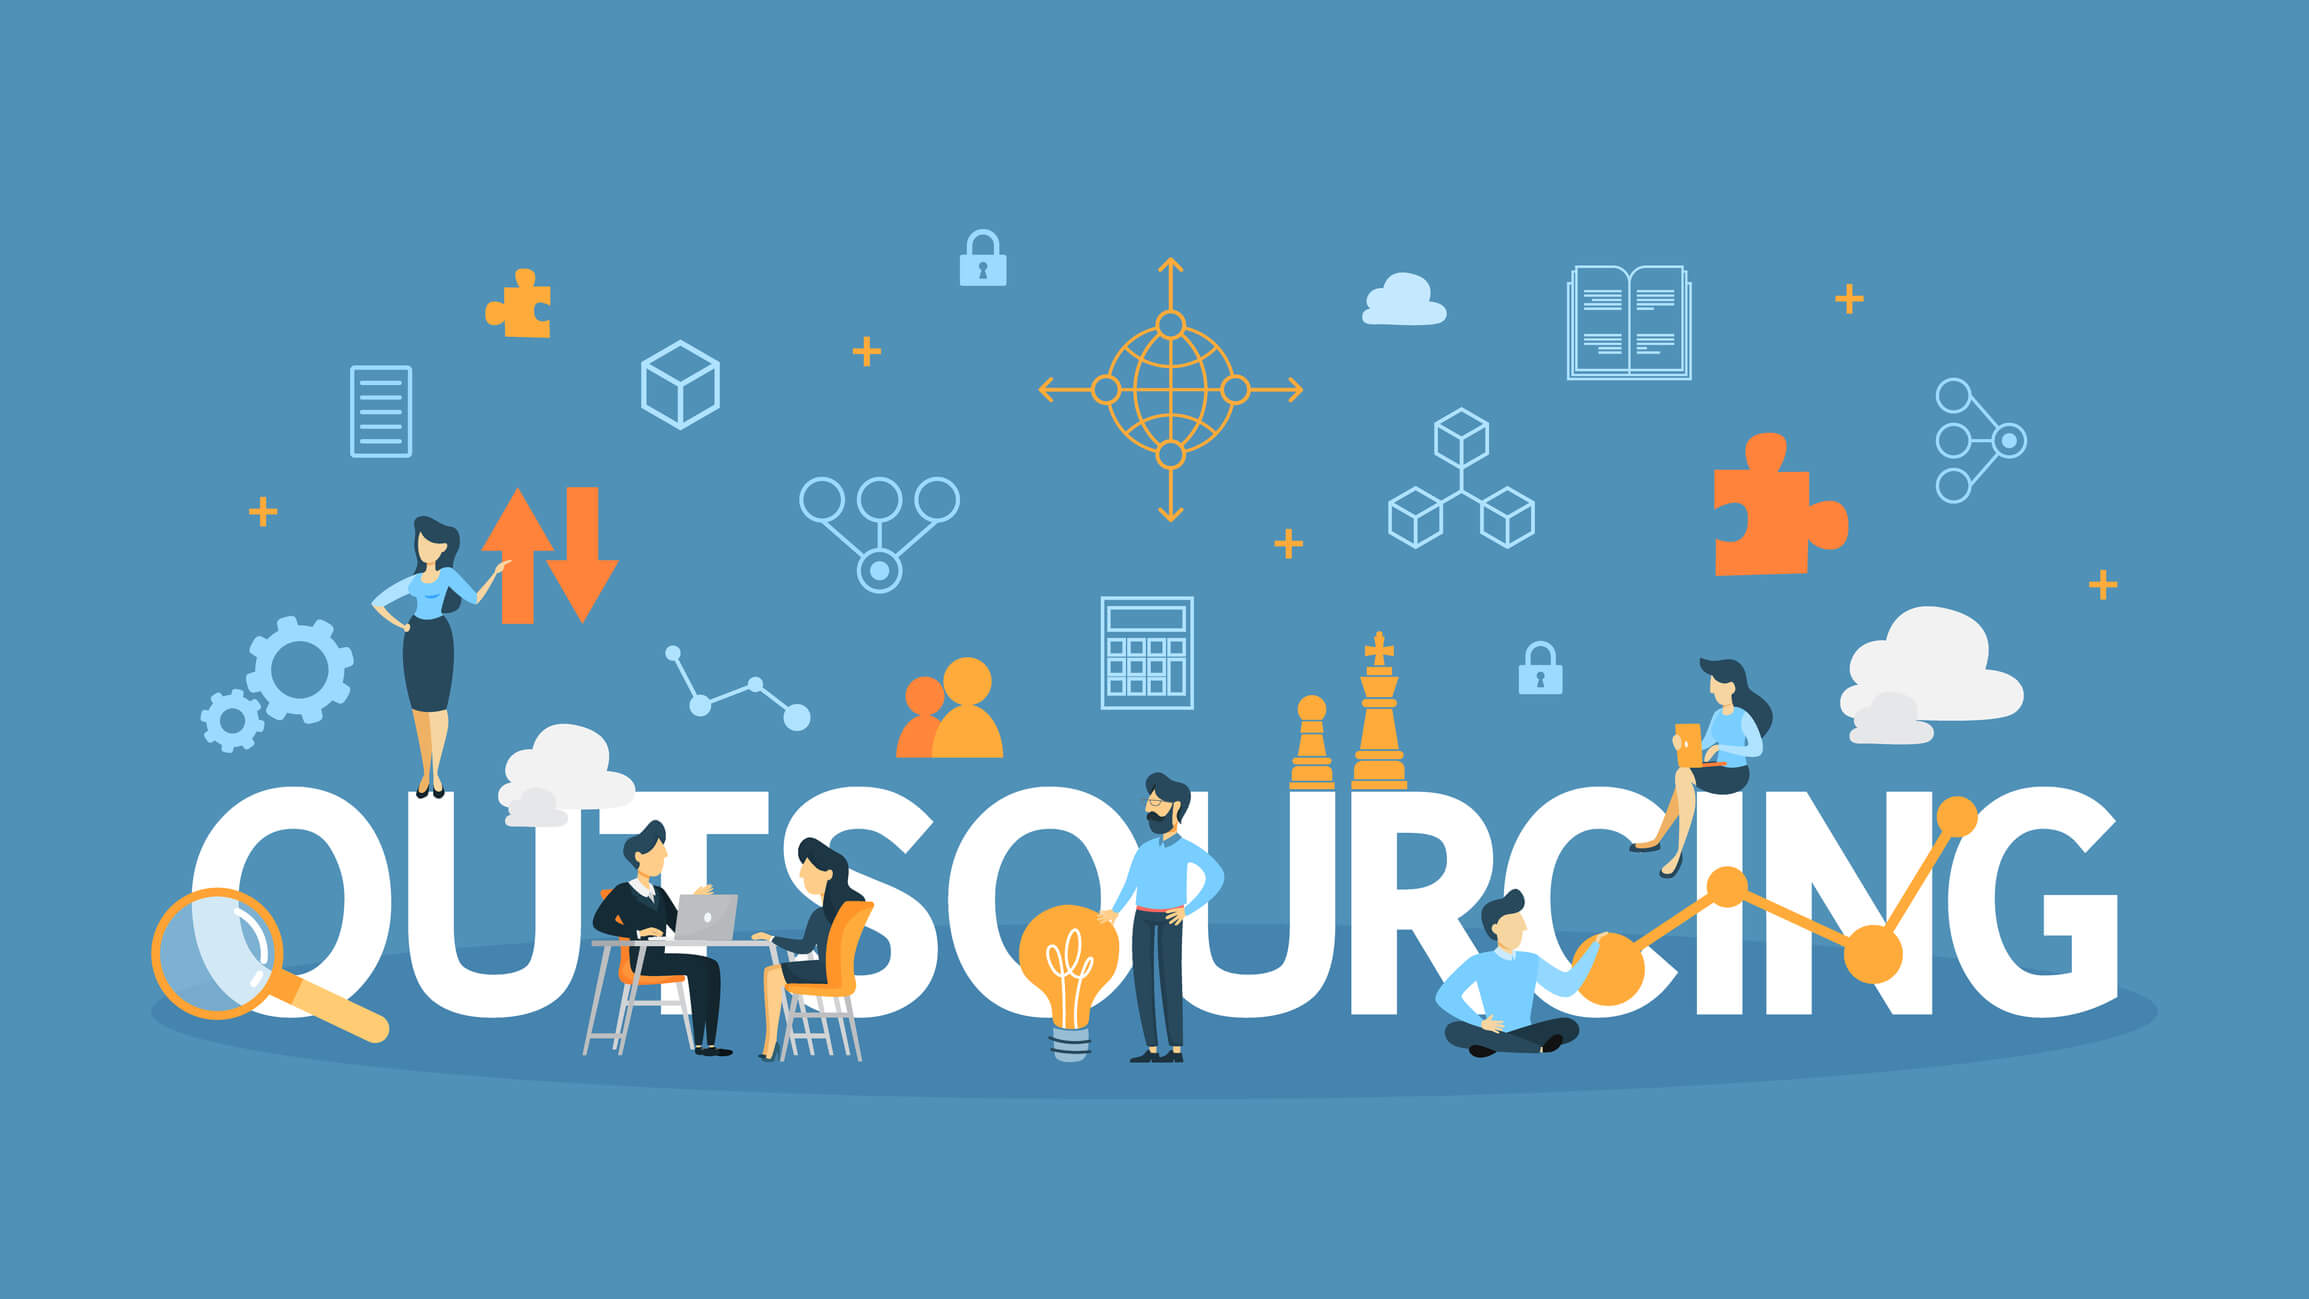 Top Software Development Outsourcing (+ Tips)   BairesDev